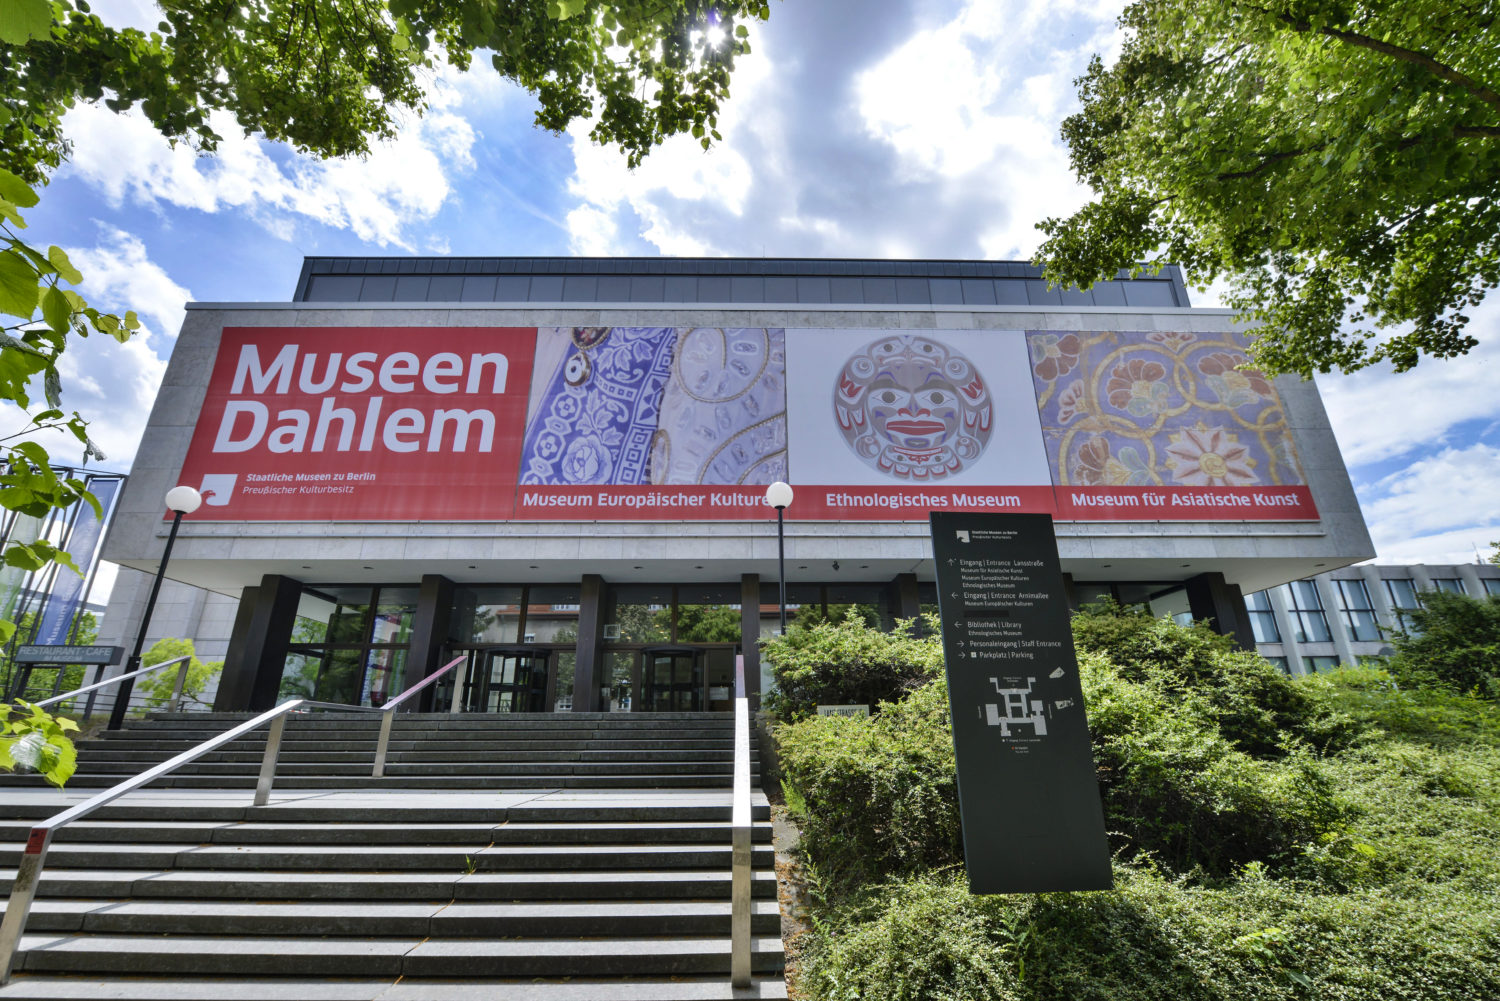 Dahlem Tipps: Das Museum Europäischer Kulturen in Berlin-Dahlem zeigt wechselnde, spannende Ausstellungen. 